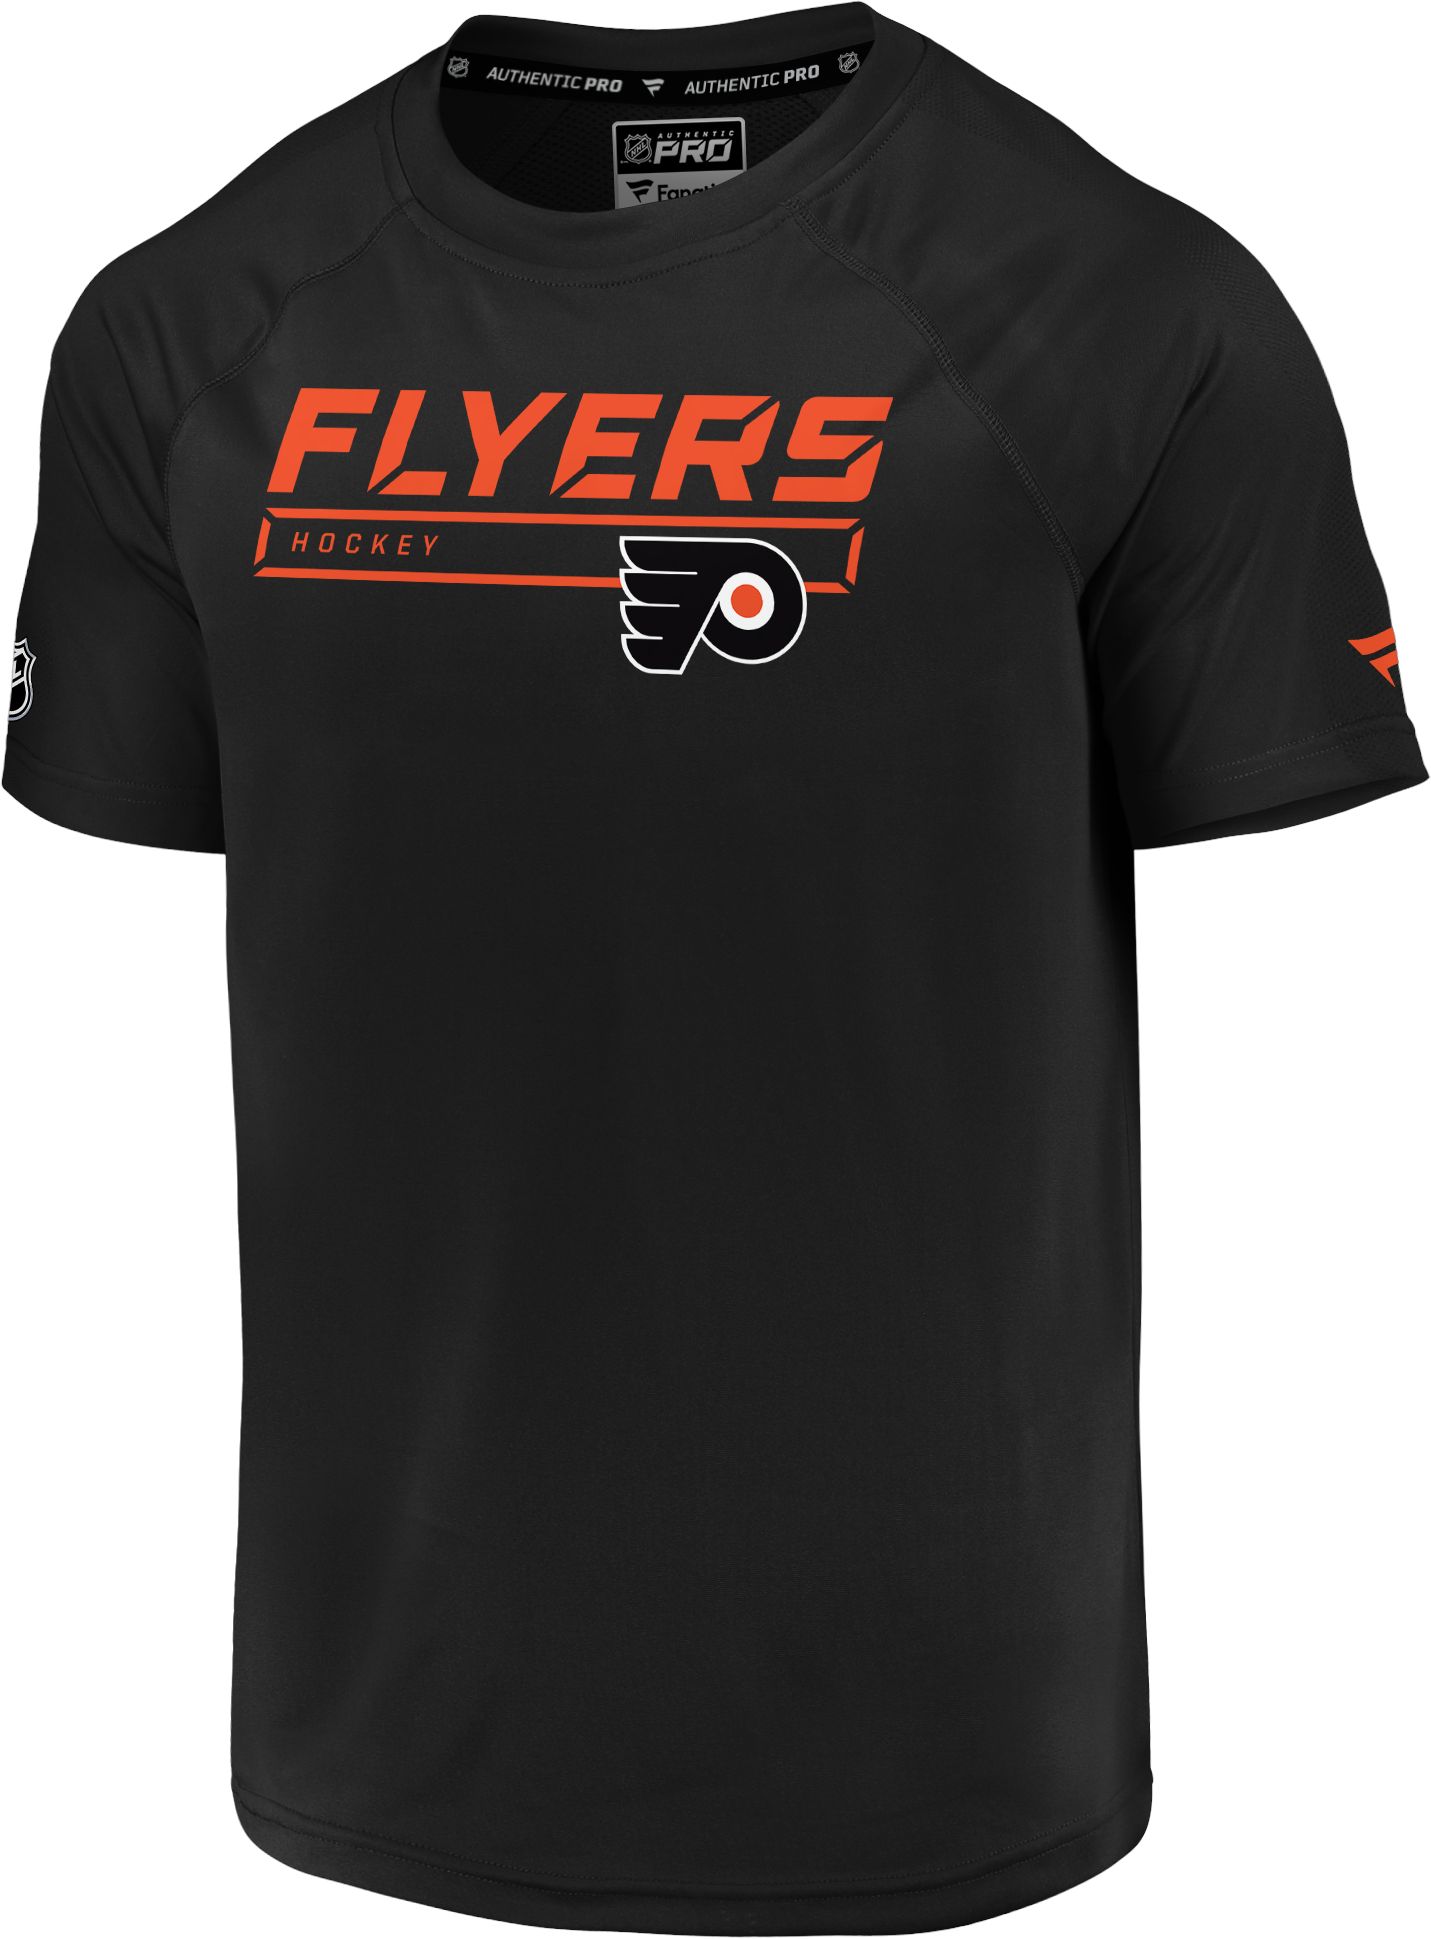 flyers hockey t shirt